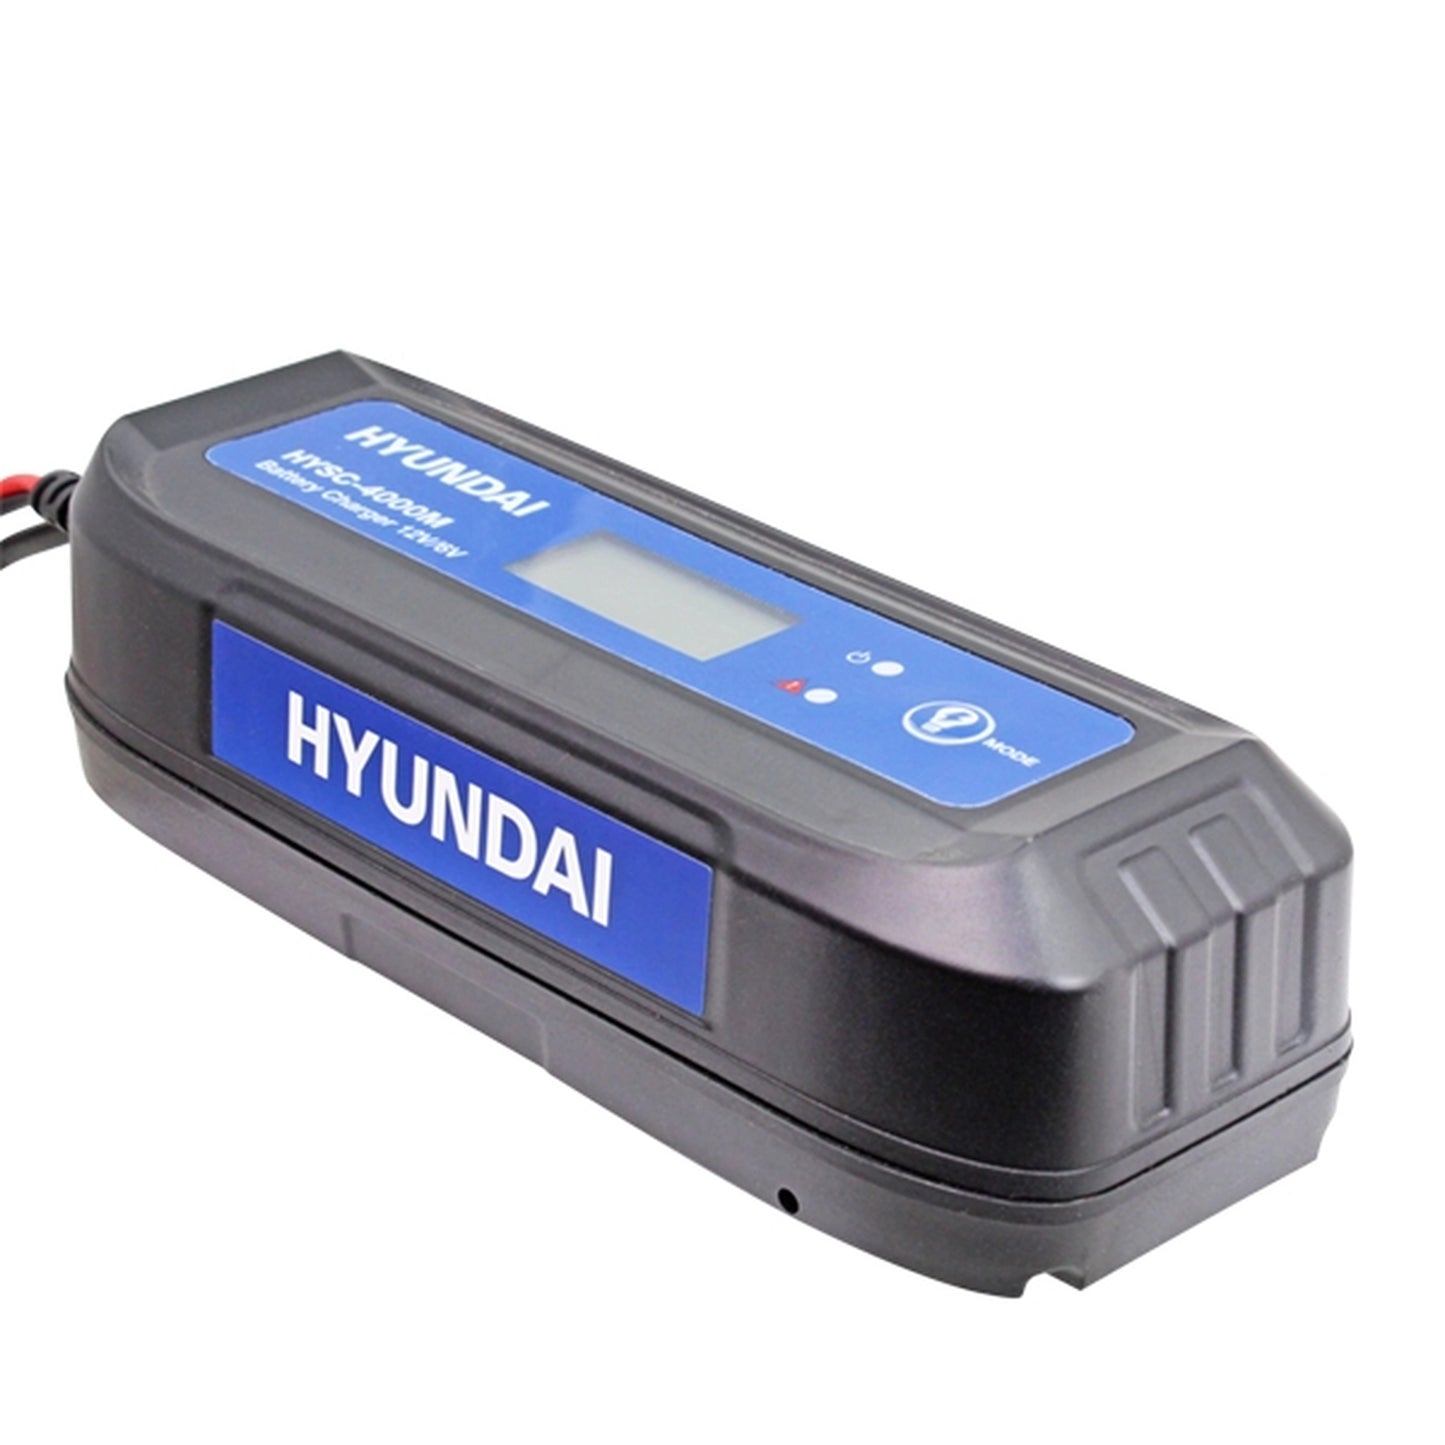 Hyundai HYSC-4000M 4Ah SMART Car Battery Charger 6v/12v